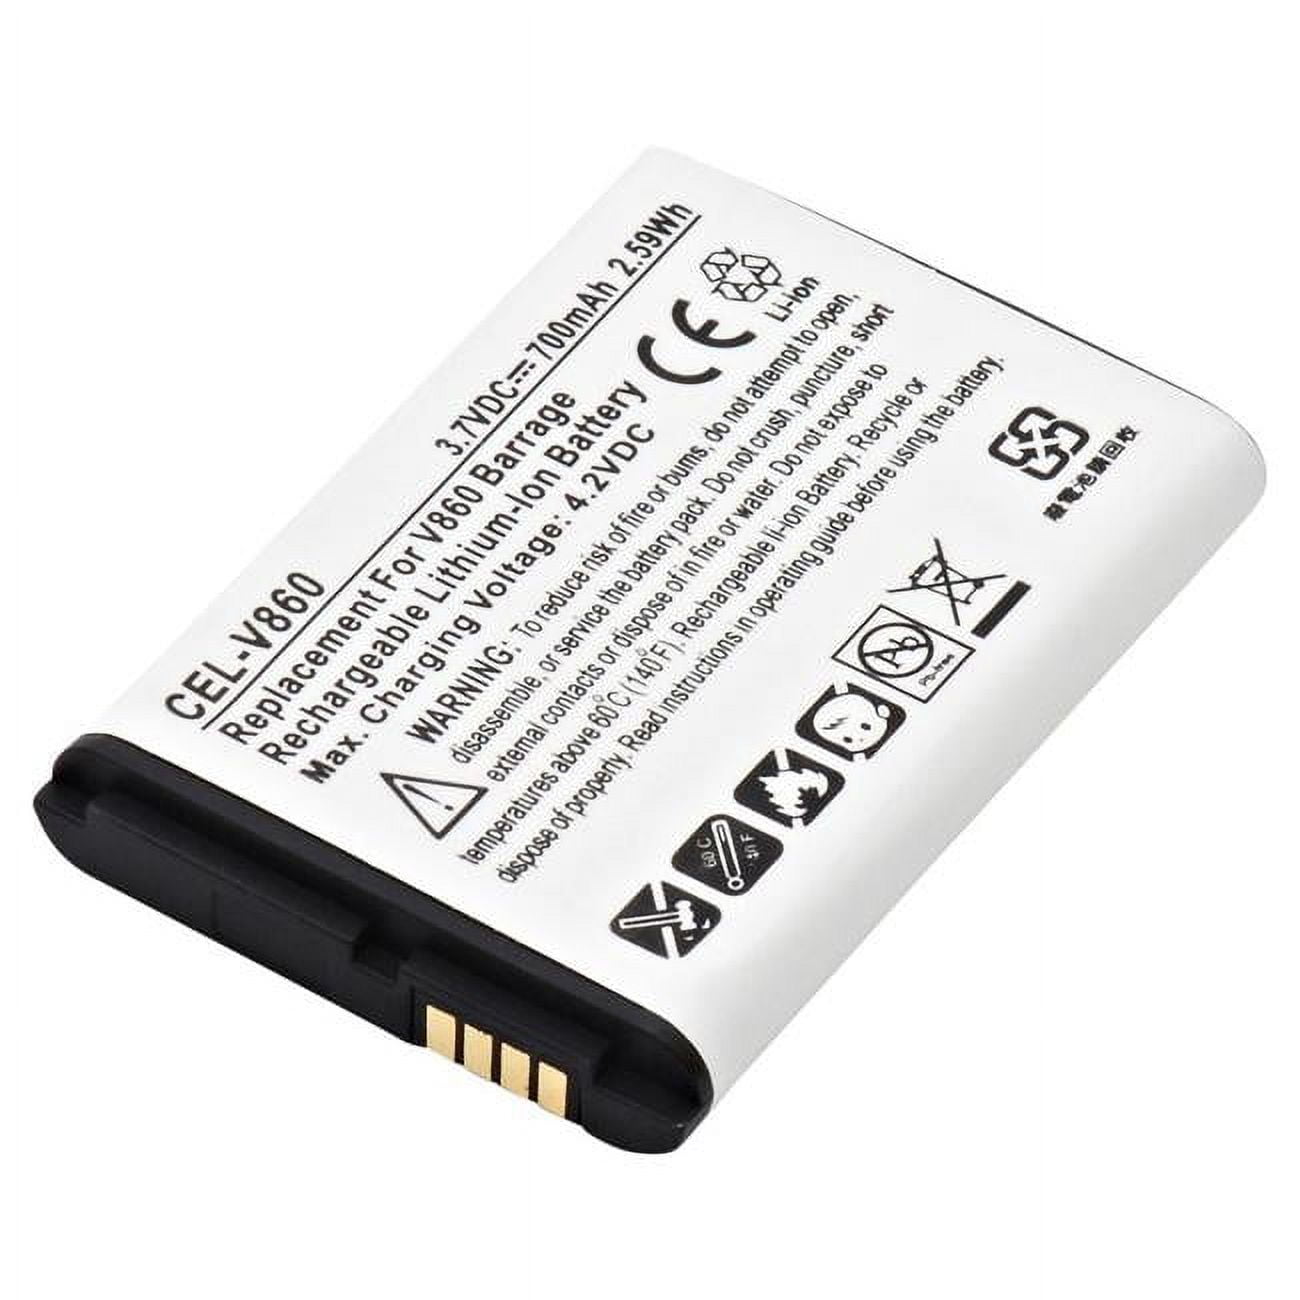 Picture of Ultralast CEL-V860 3.7V & 700 mAh Replacement Lithium-Ion Battery for Motorola BARRAGE V860 Cellular Phone